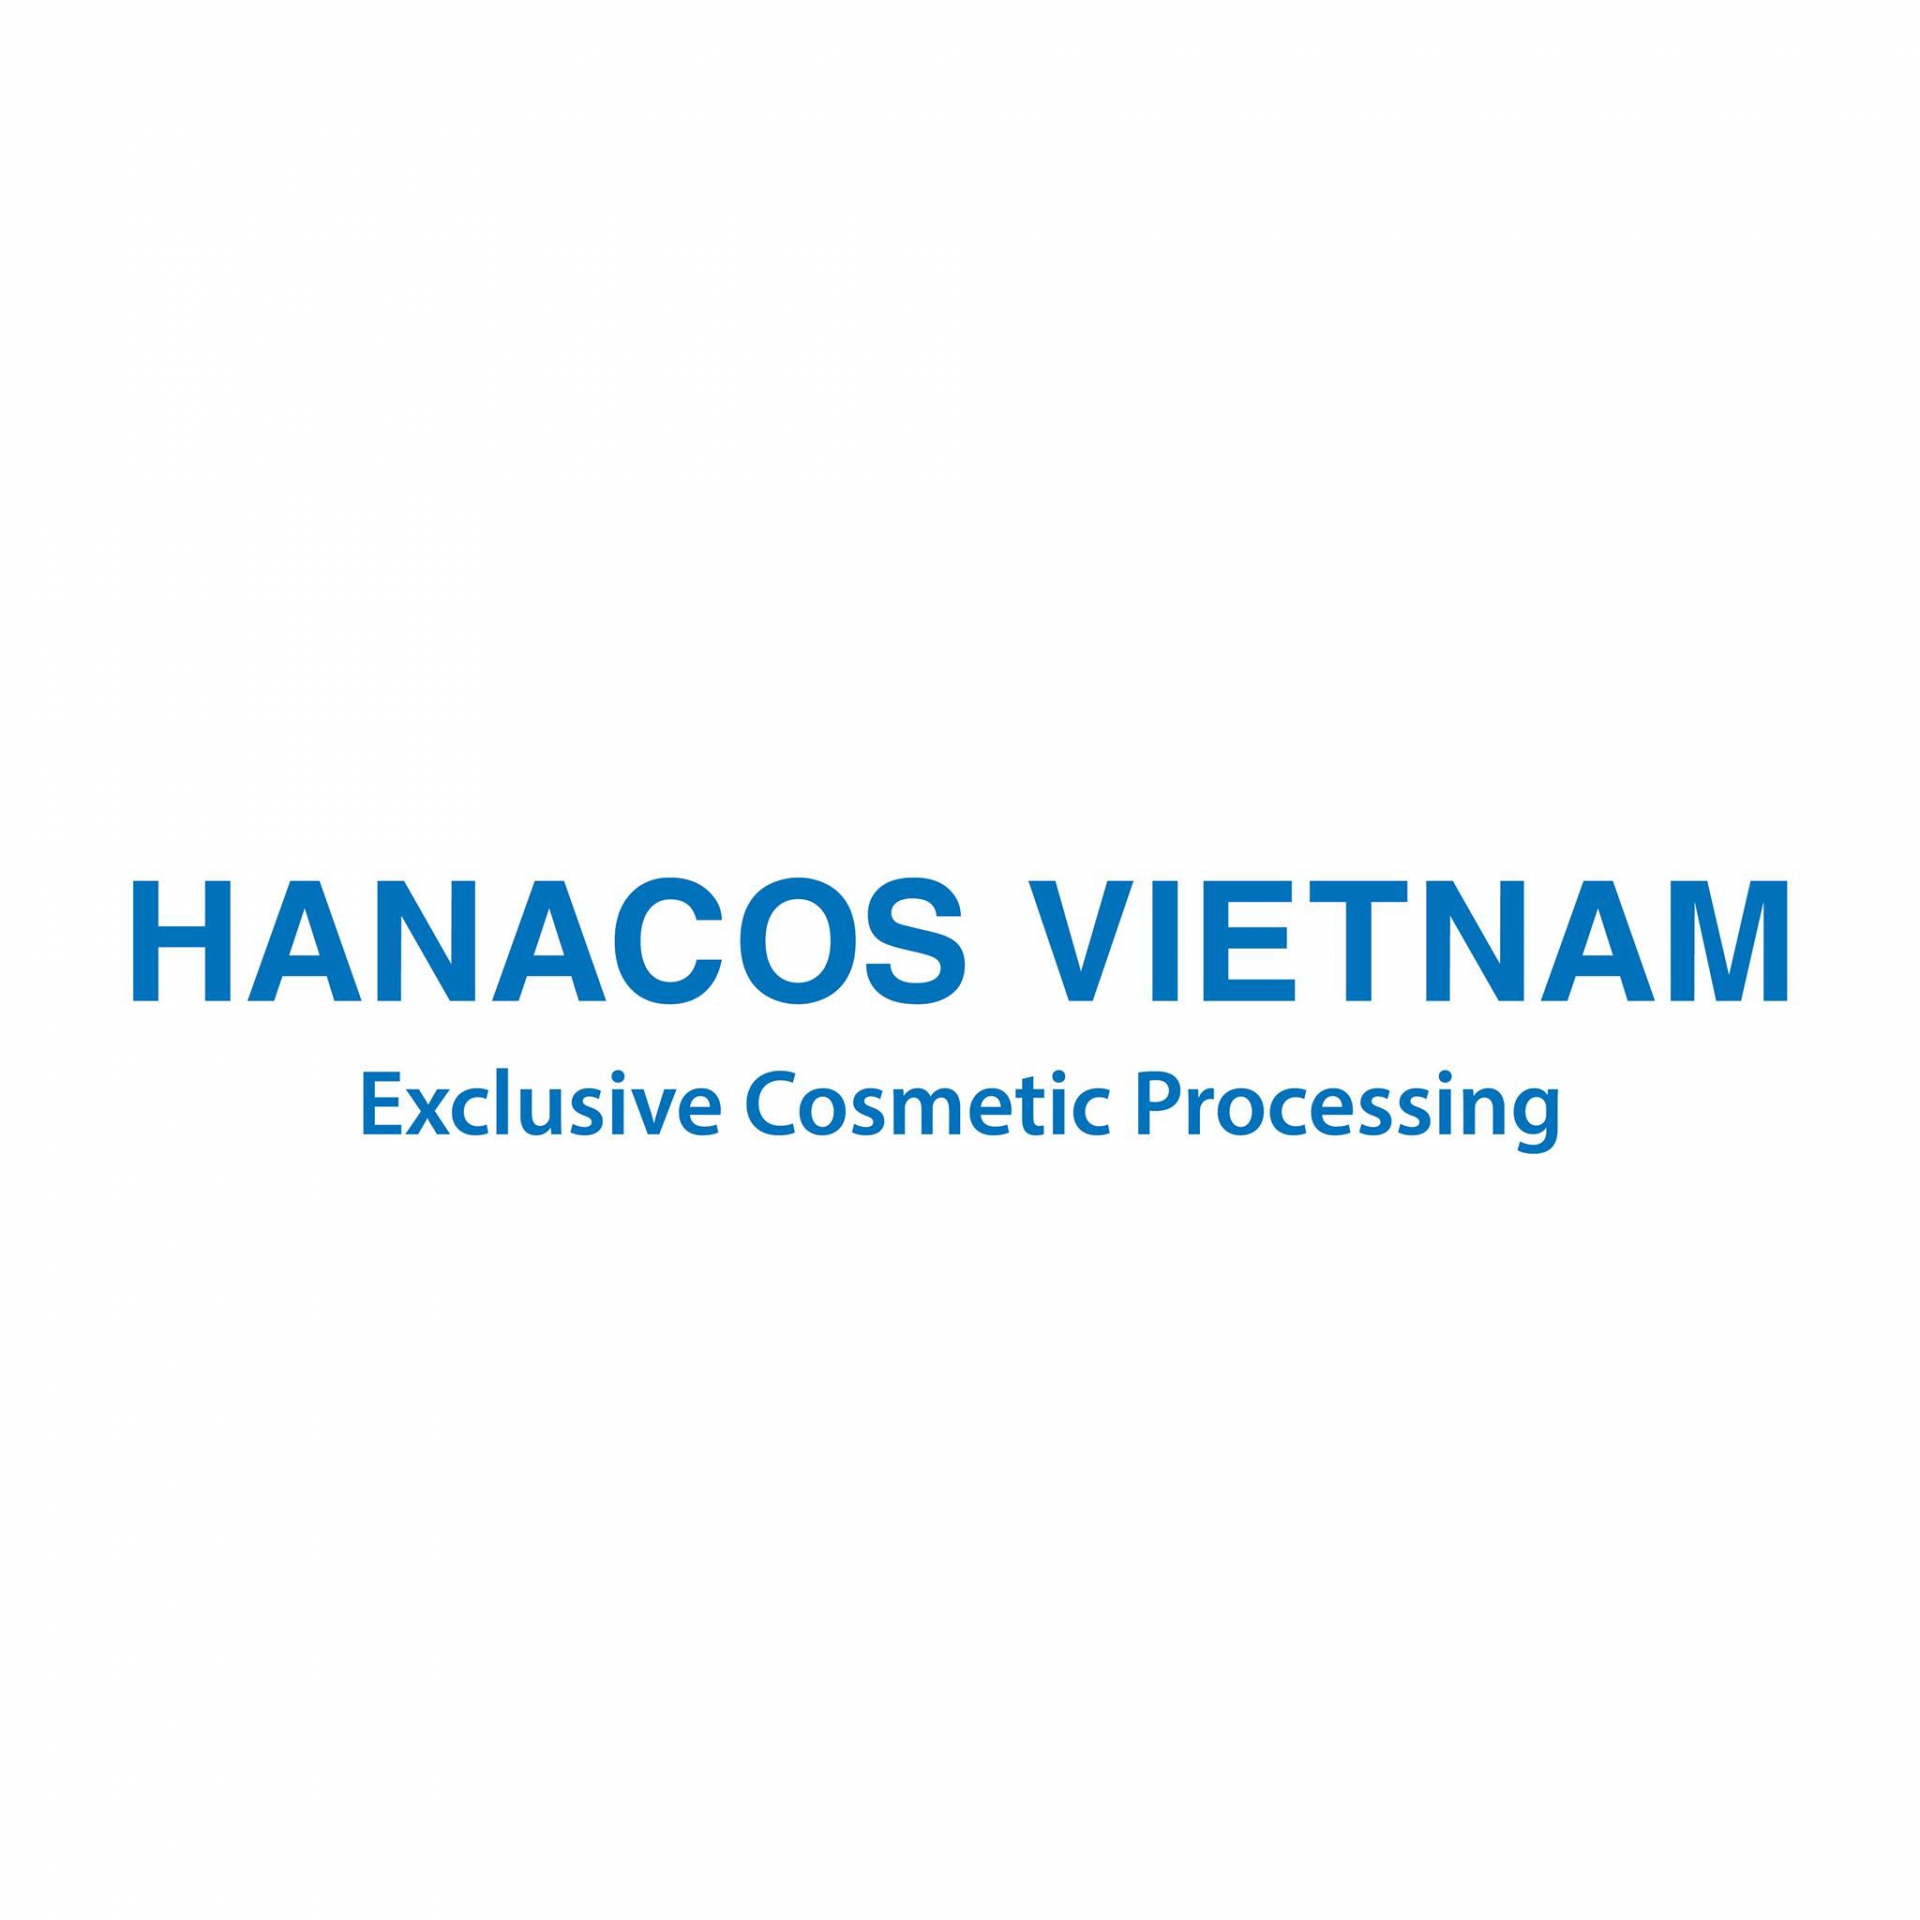 Hanacos Vietnam